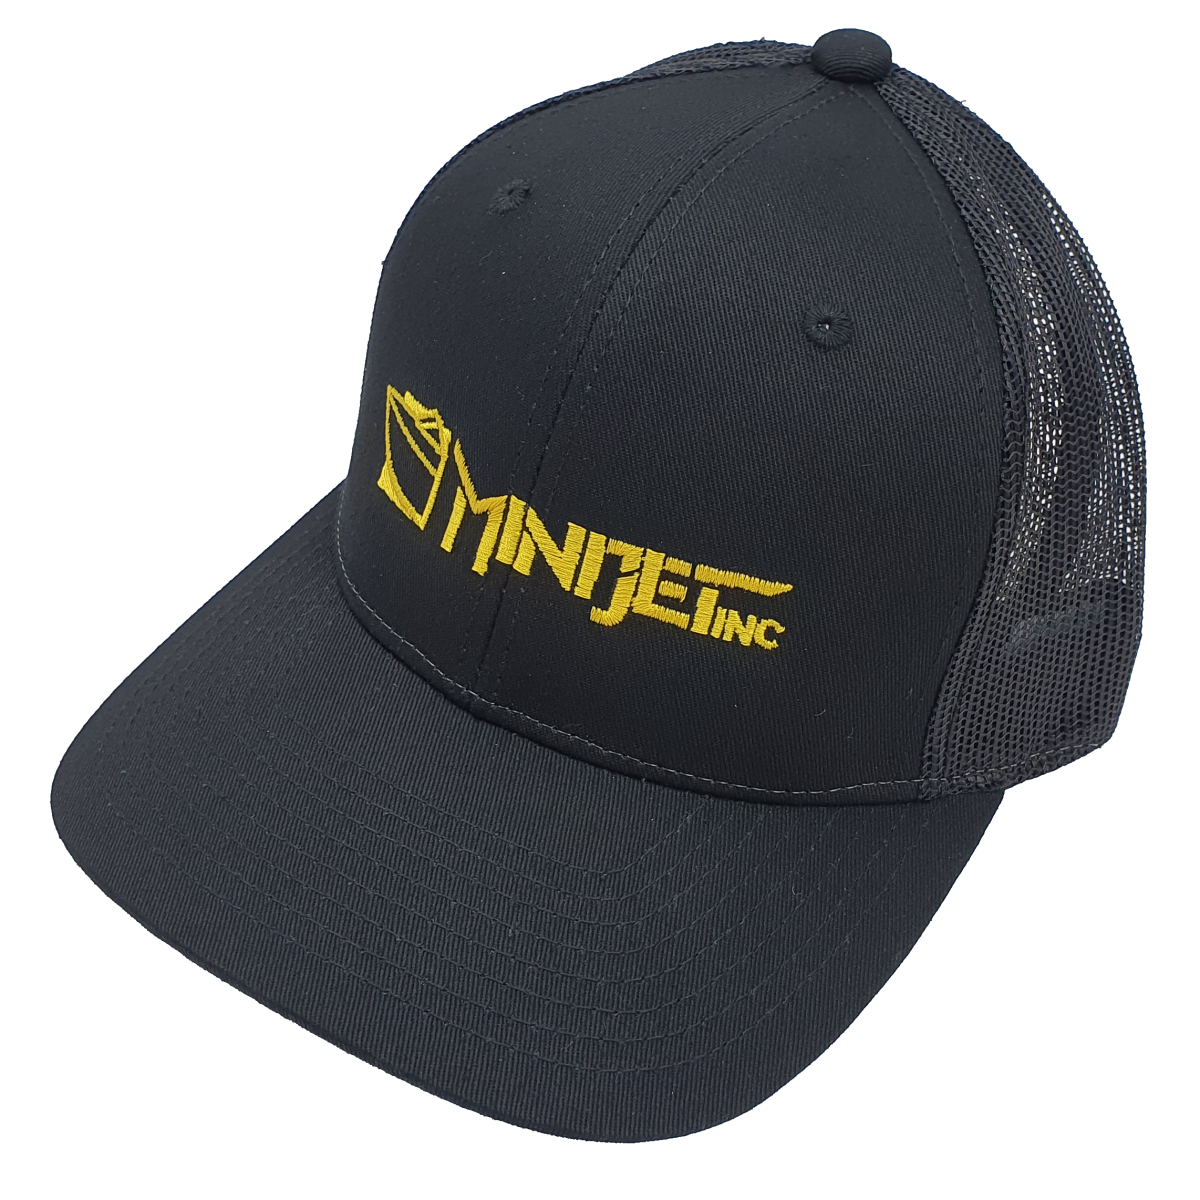 Minijet Hat Black with Yellow Logo